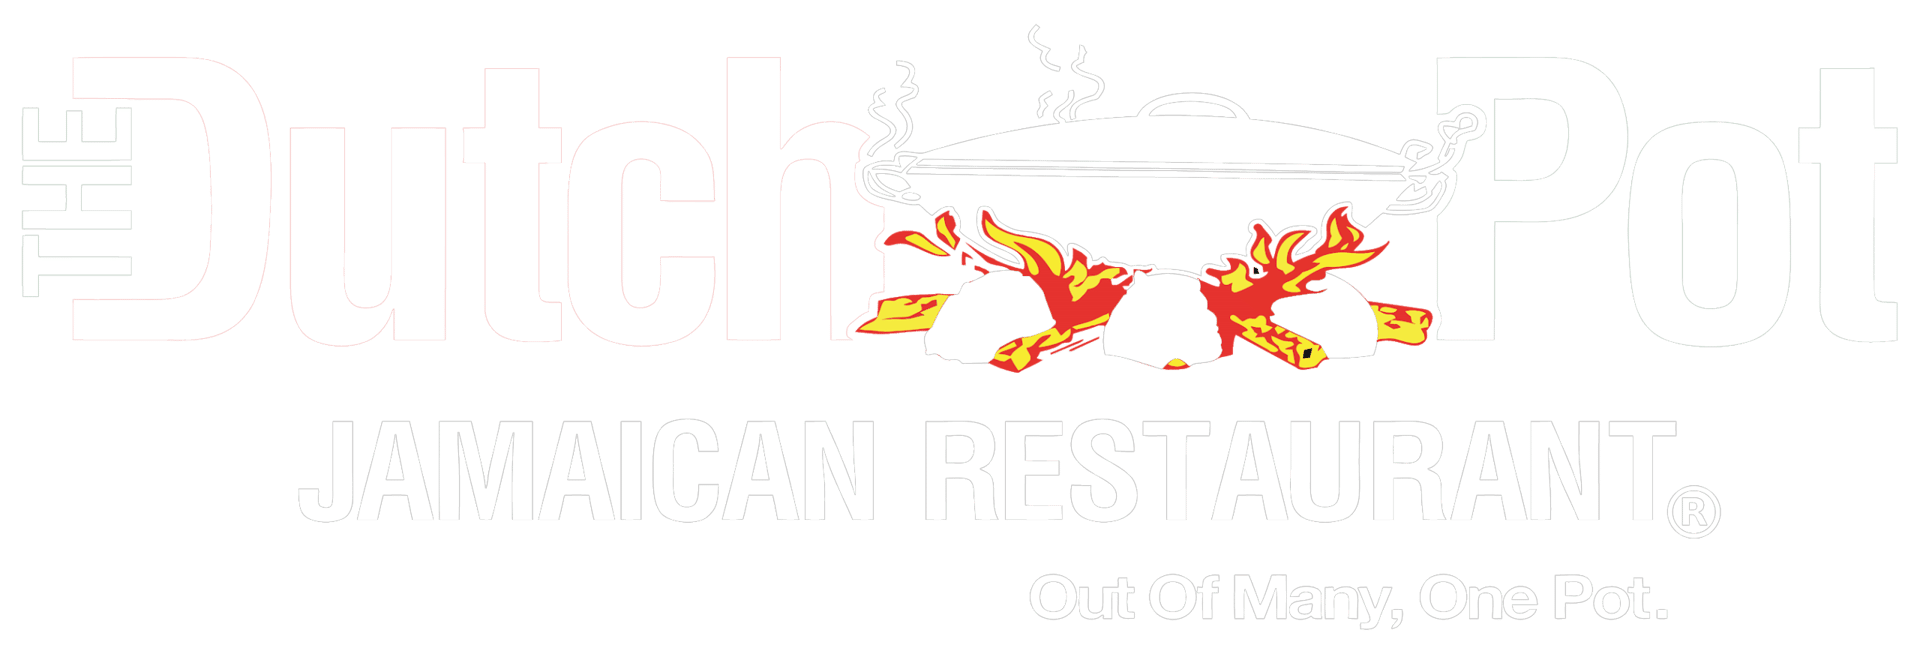 Dutch Pot Jamaican Restaurant - Picture of The Dutch Pot Jamaican